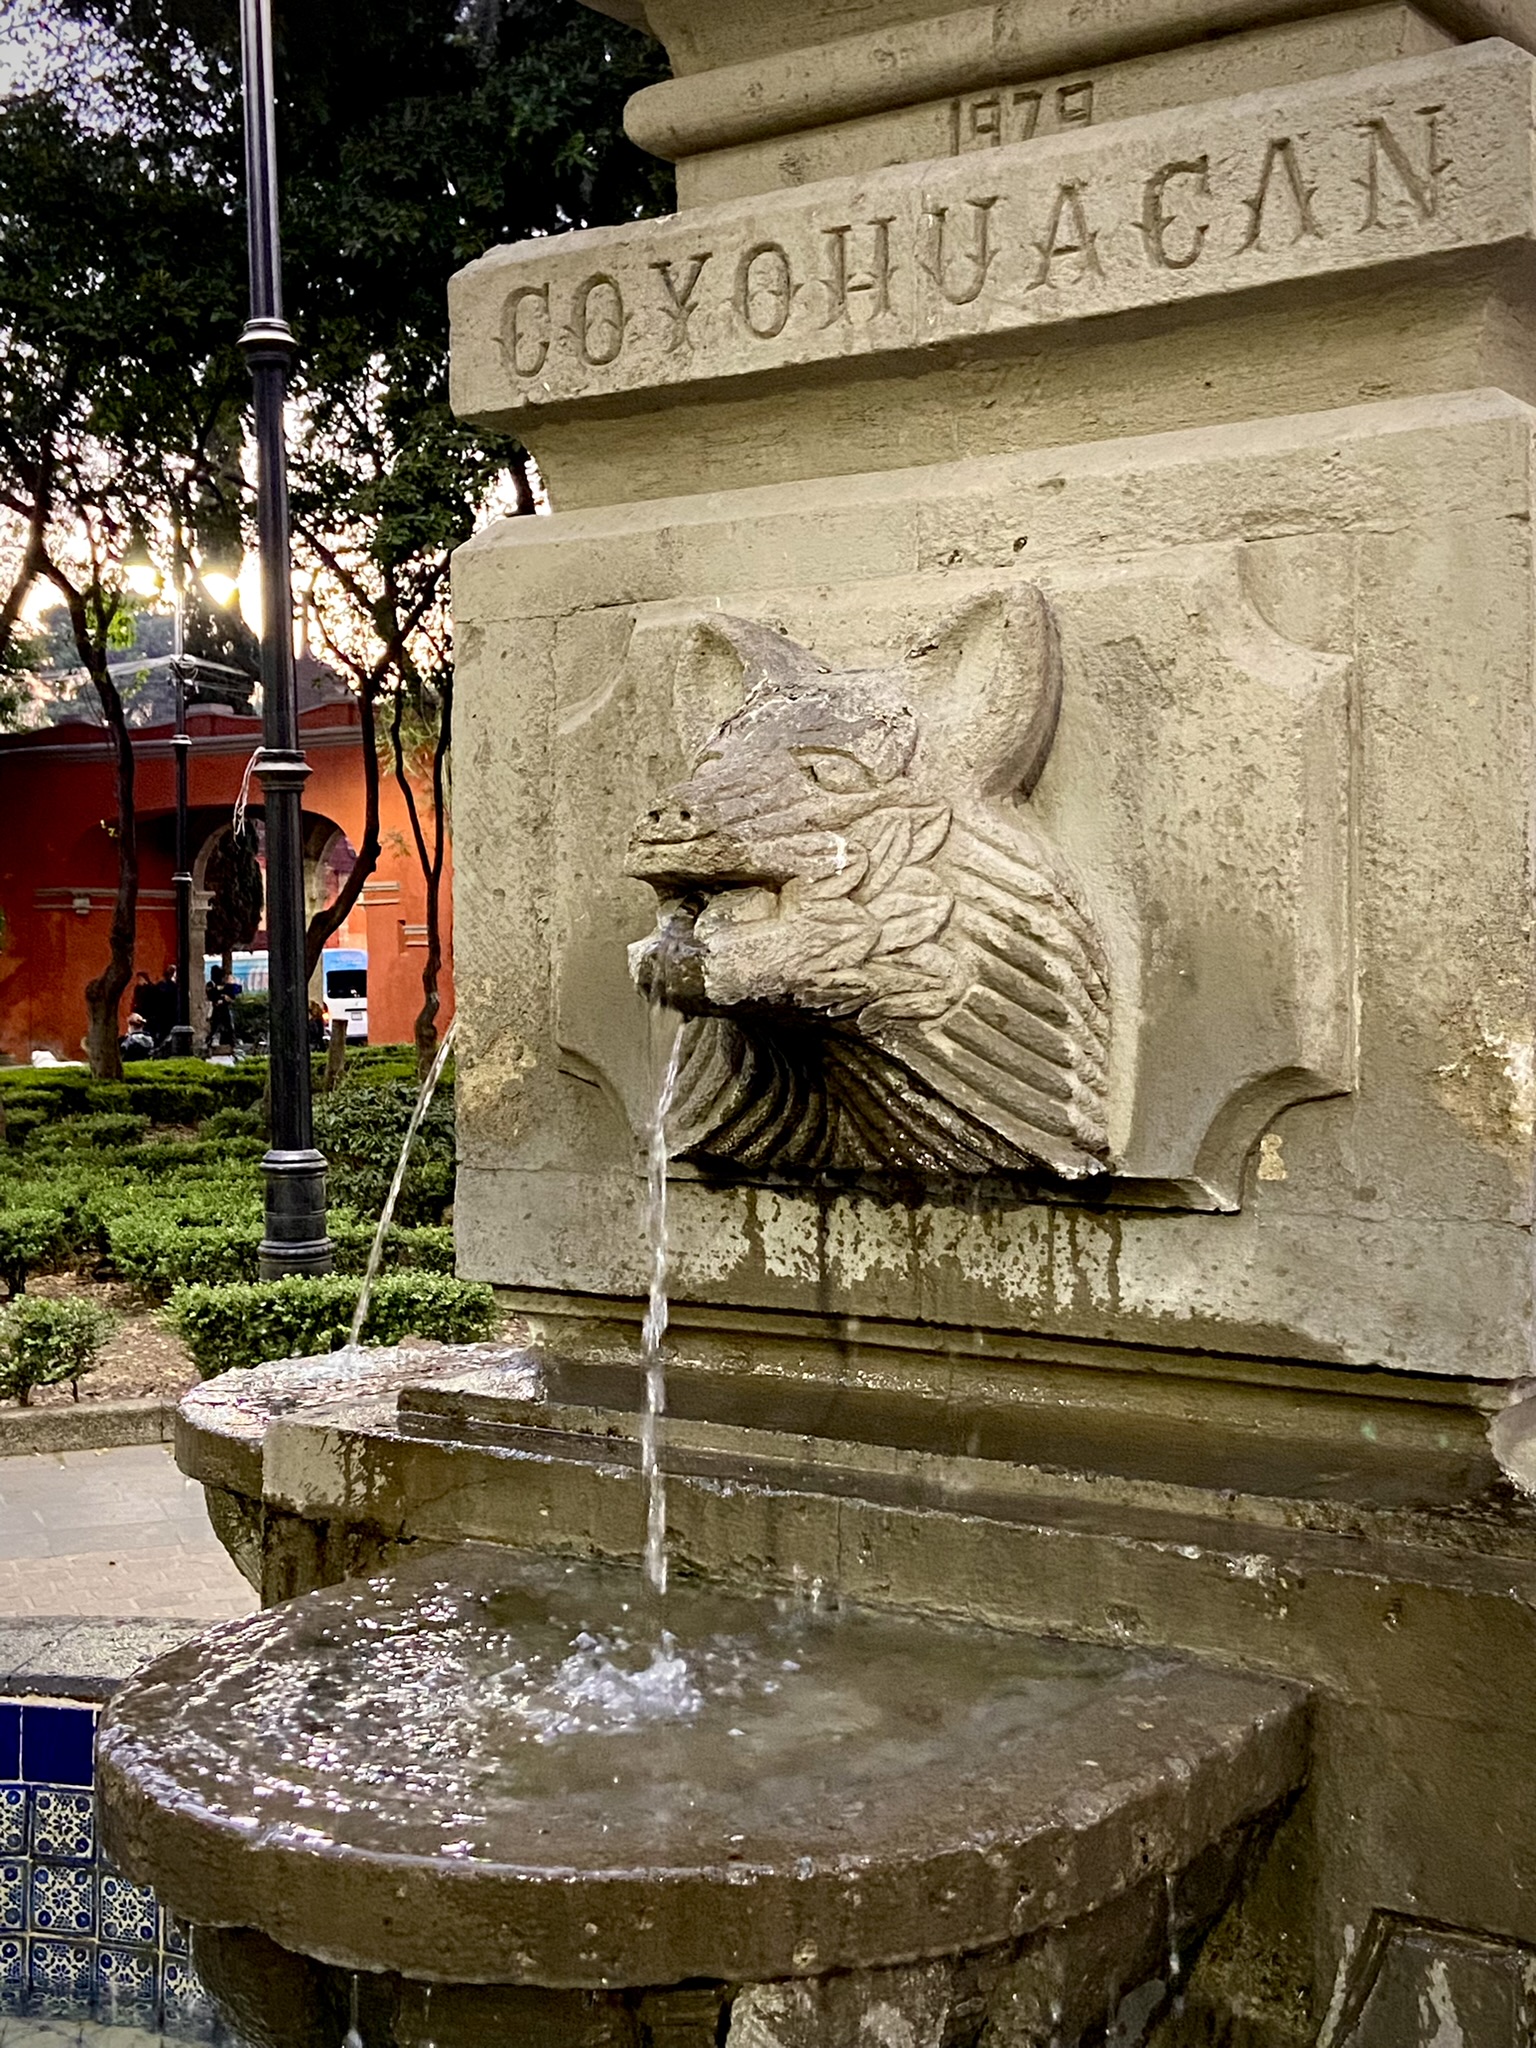 Fountain in Coyoacan